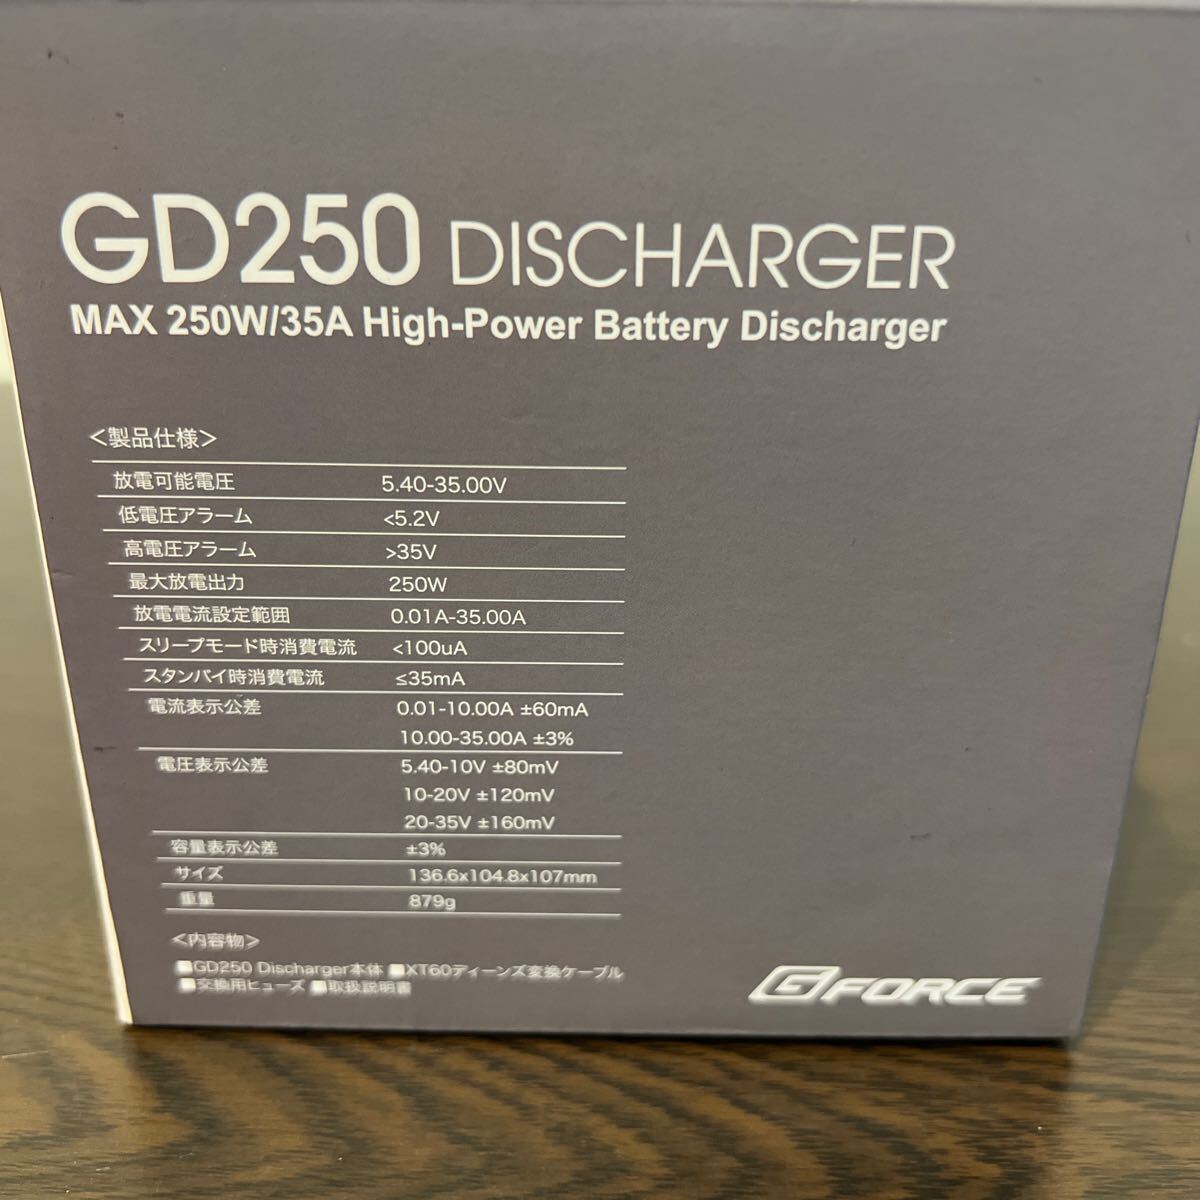  used beautiful goods!ji- force discharge machine GD250 discharge .-250W discharge vessel Discharger G0317